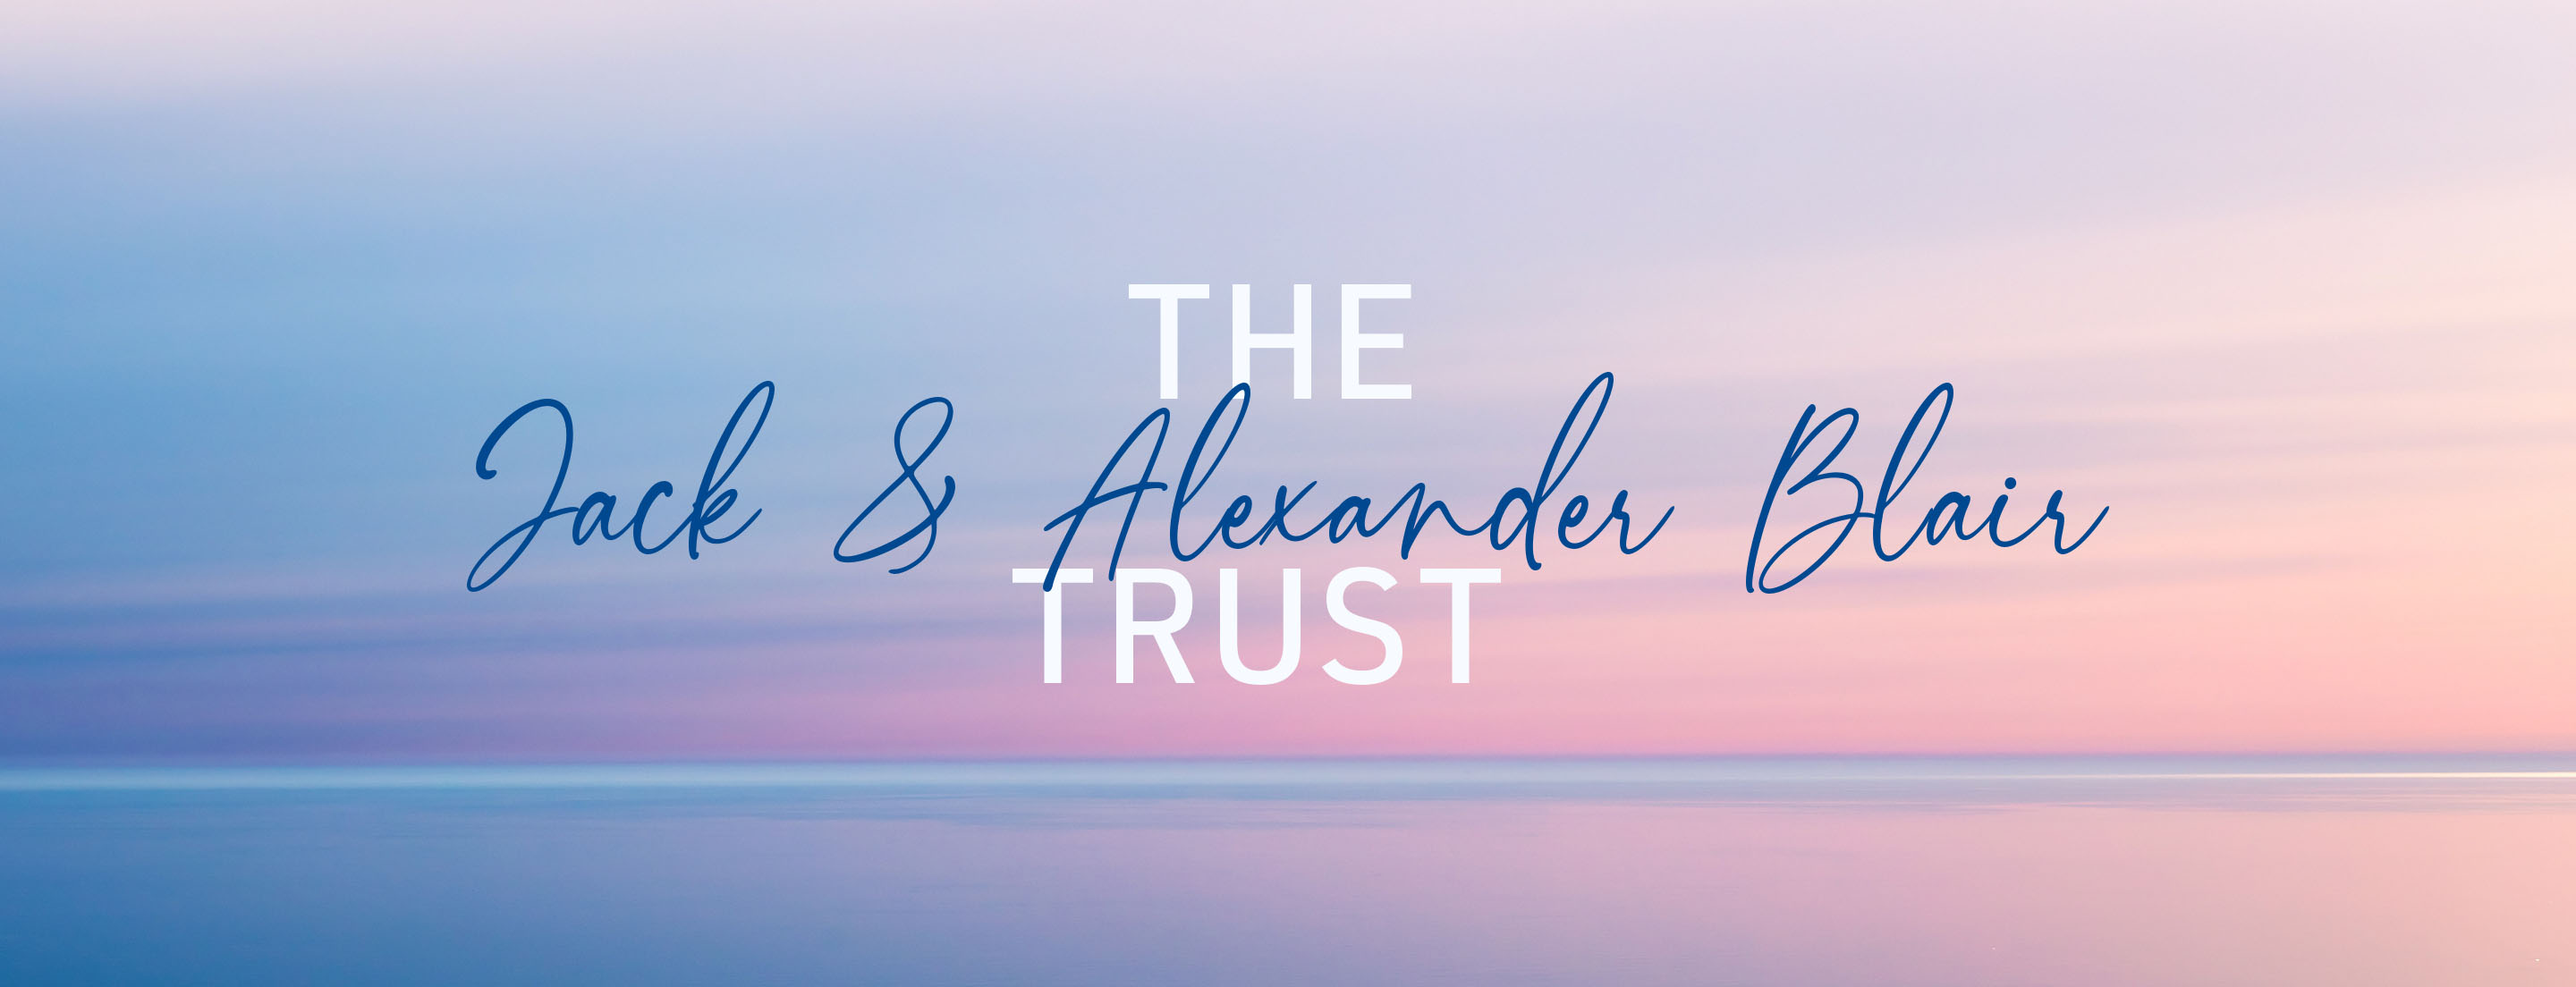 Jack & Alexander Blair Trust